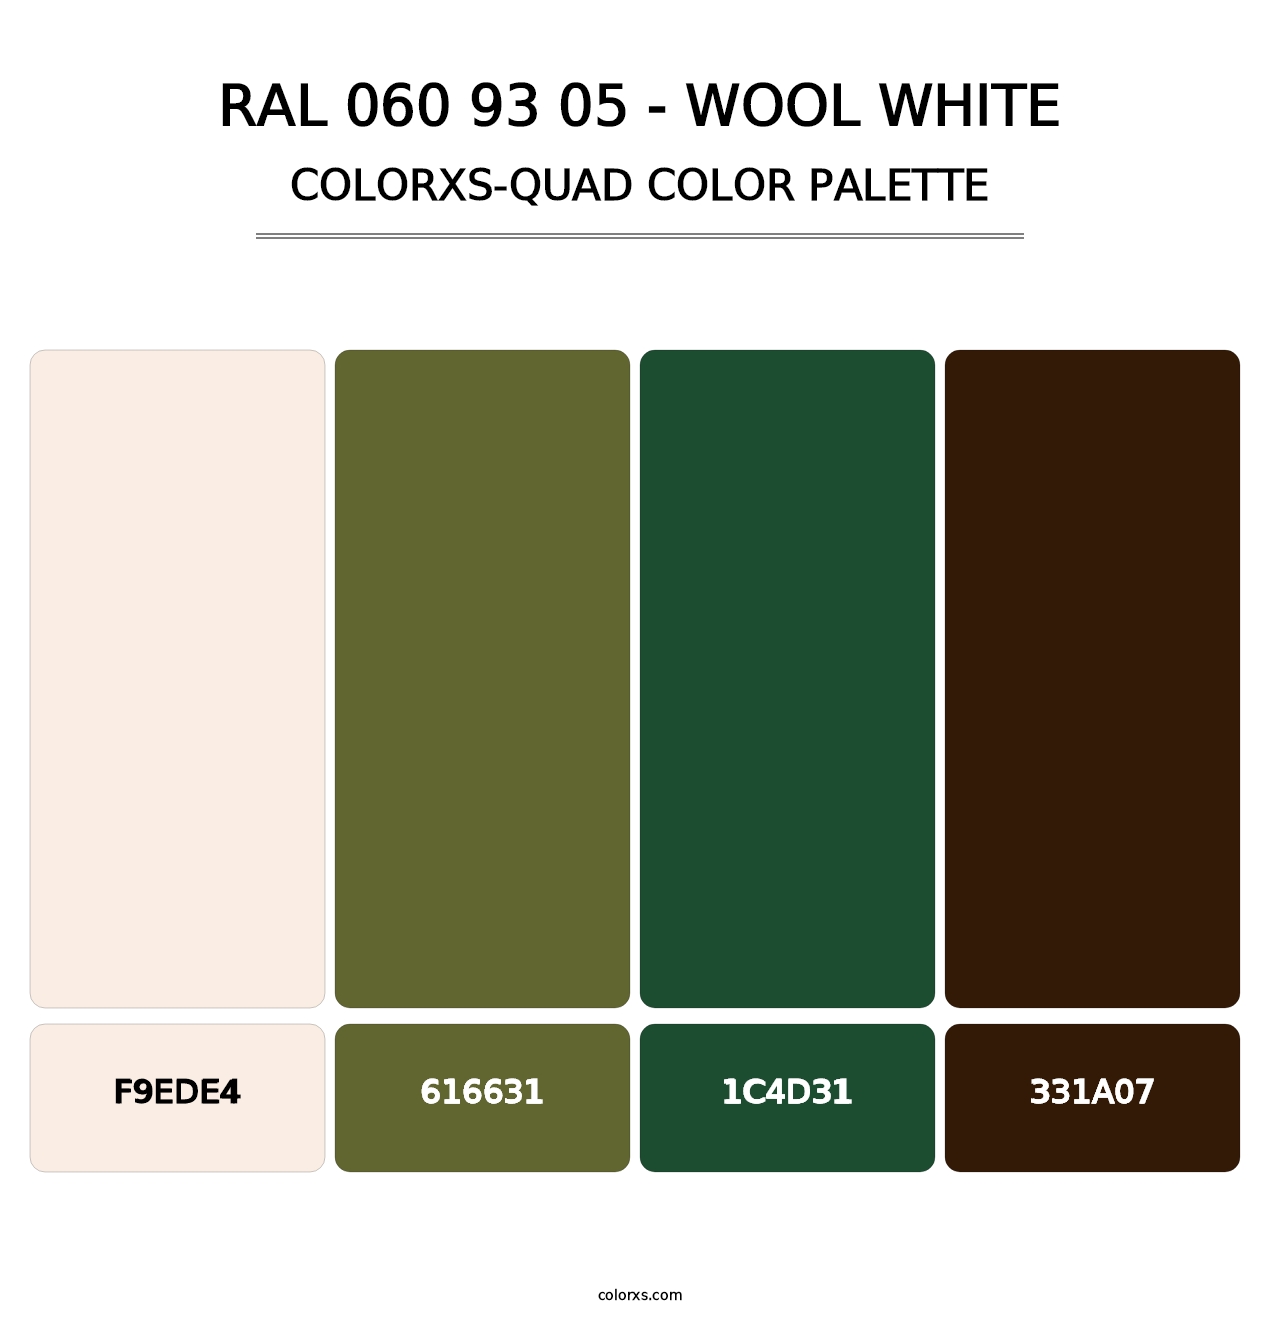 RAL 060 93 05 - Wool White - Colorxs Quad Palette